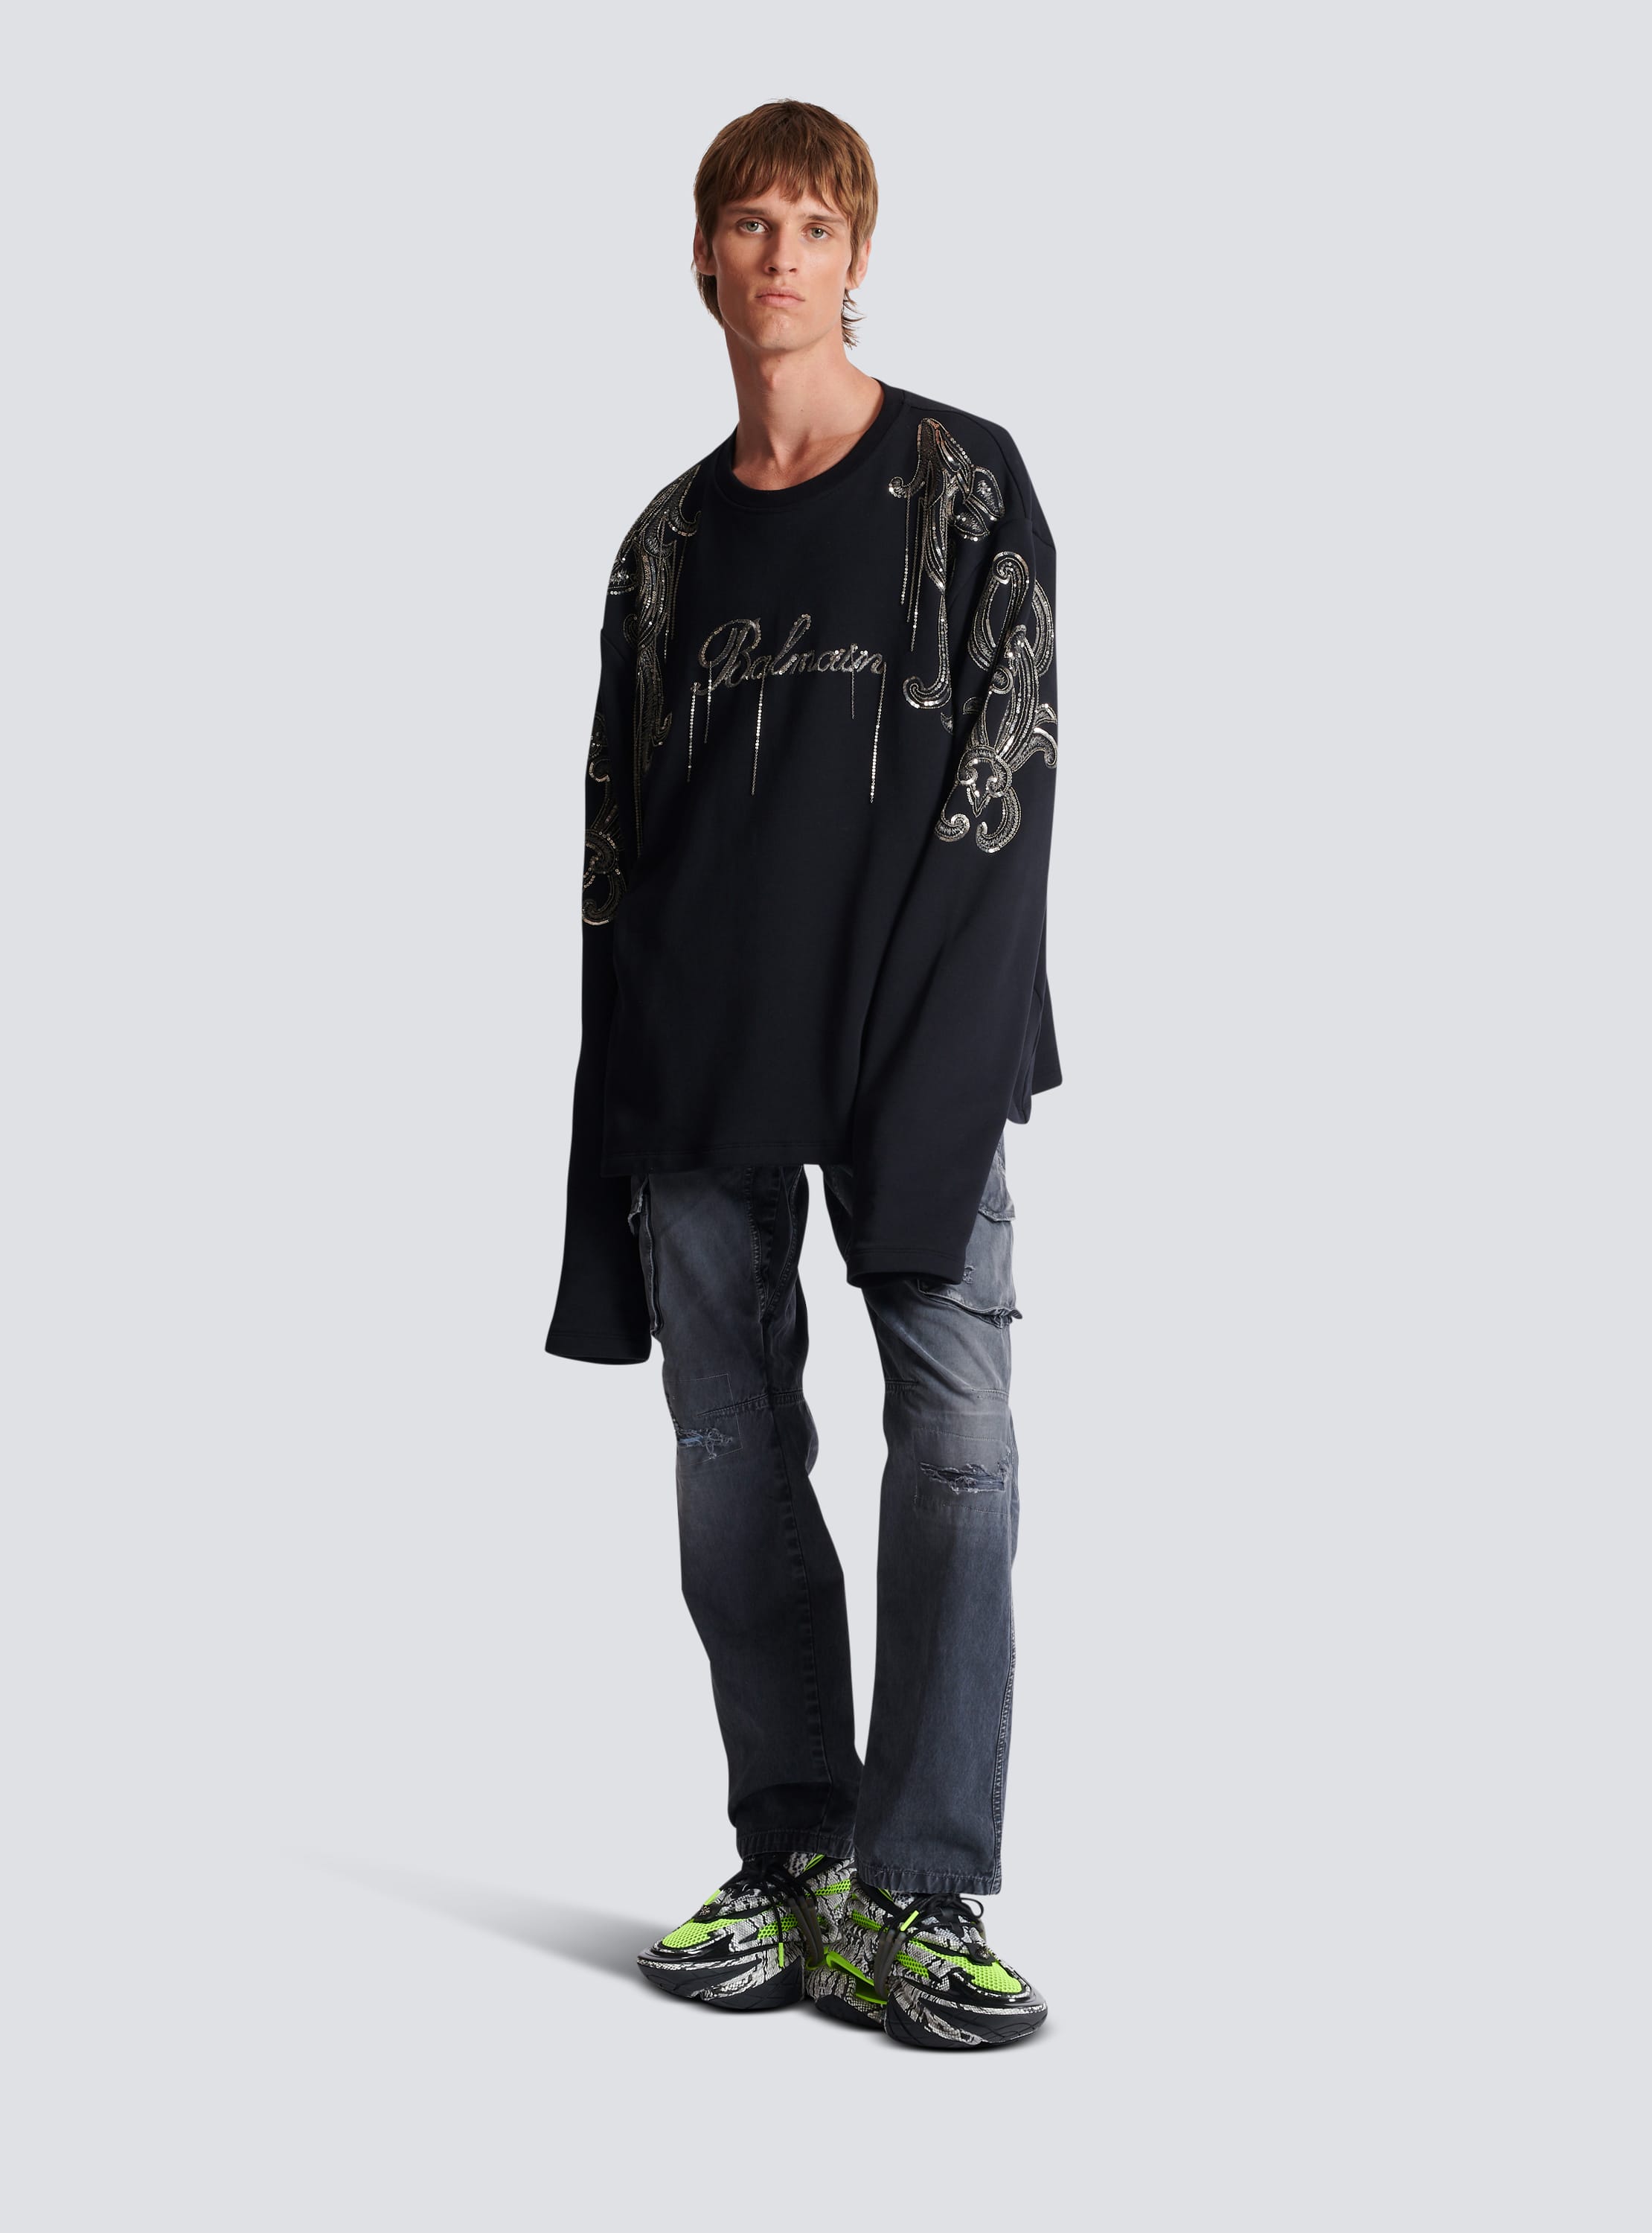 Besticktes Balmain Signature Sweatshirt mit Ketten